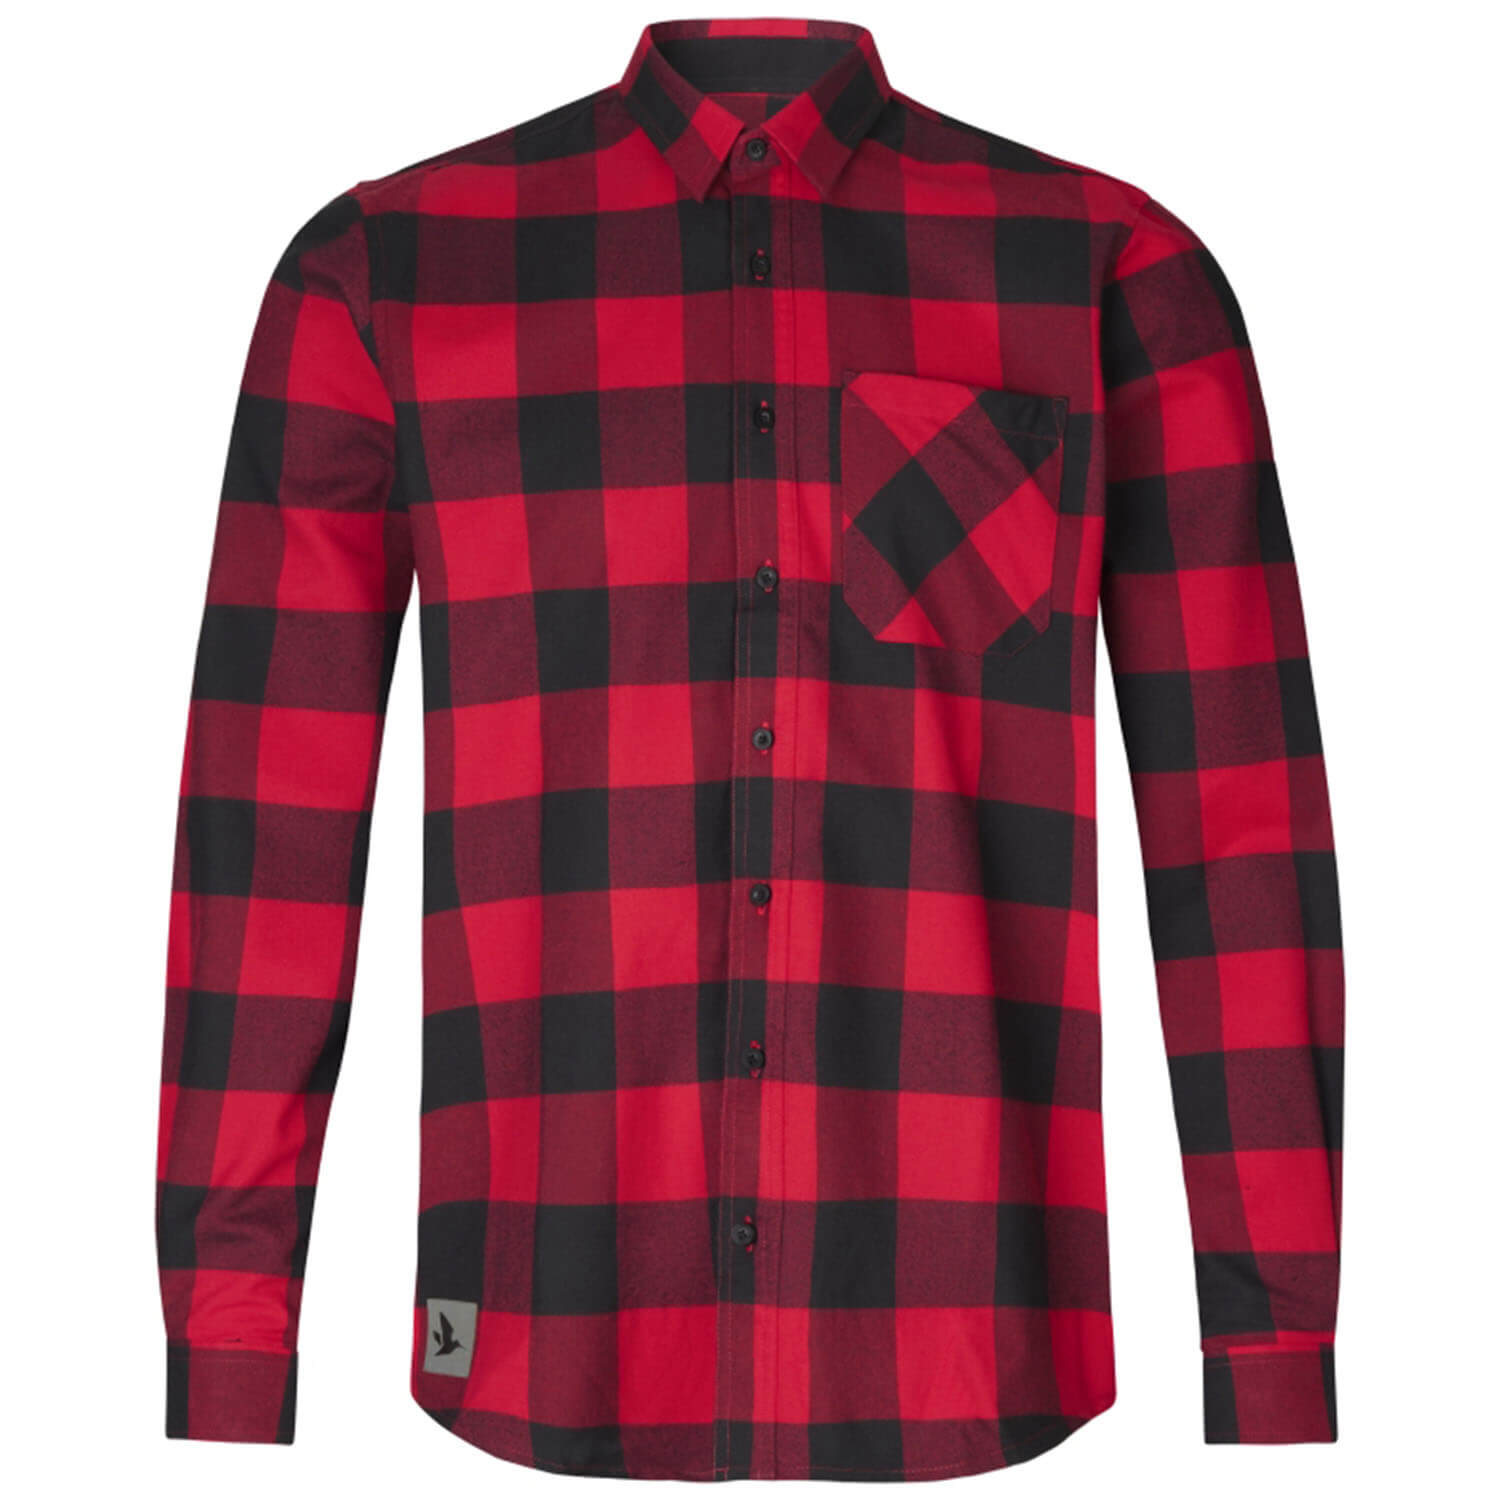  Seeland Jachthemd Toronto (rode ruit) - Overhemden & shirts